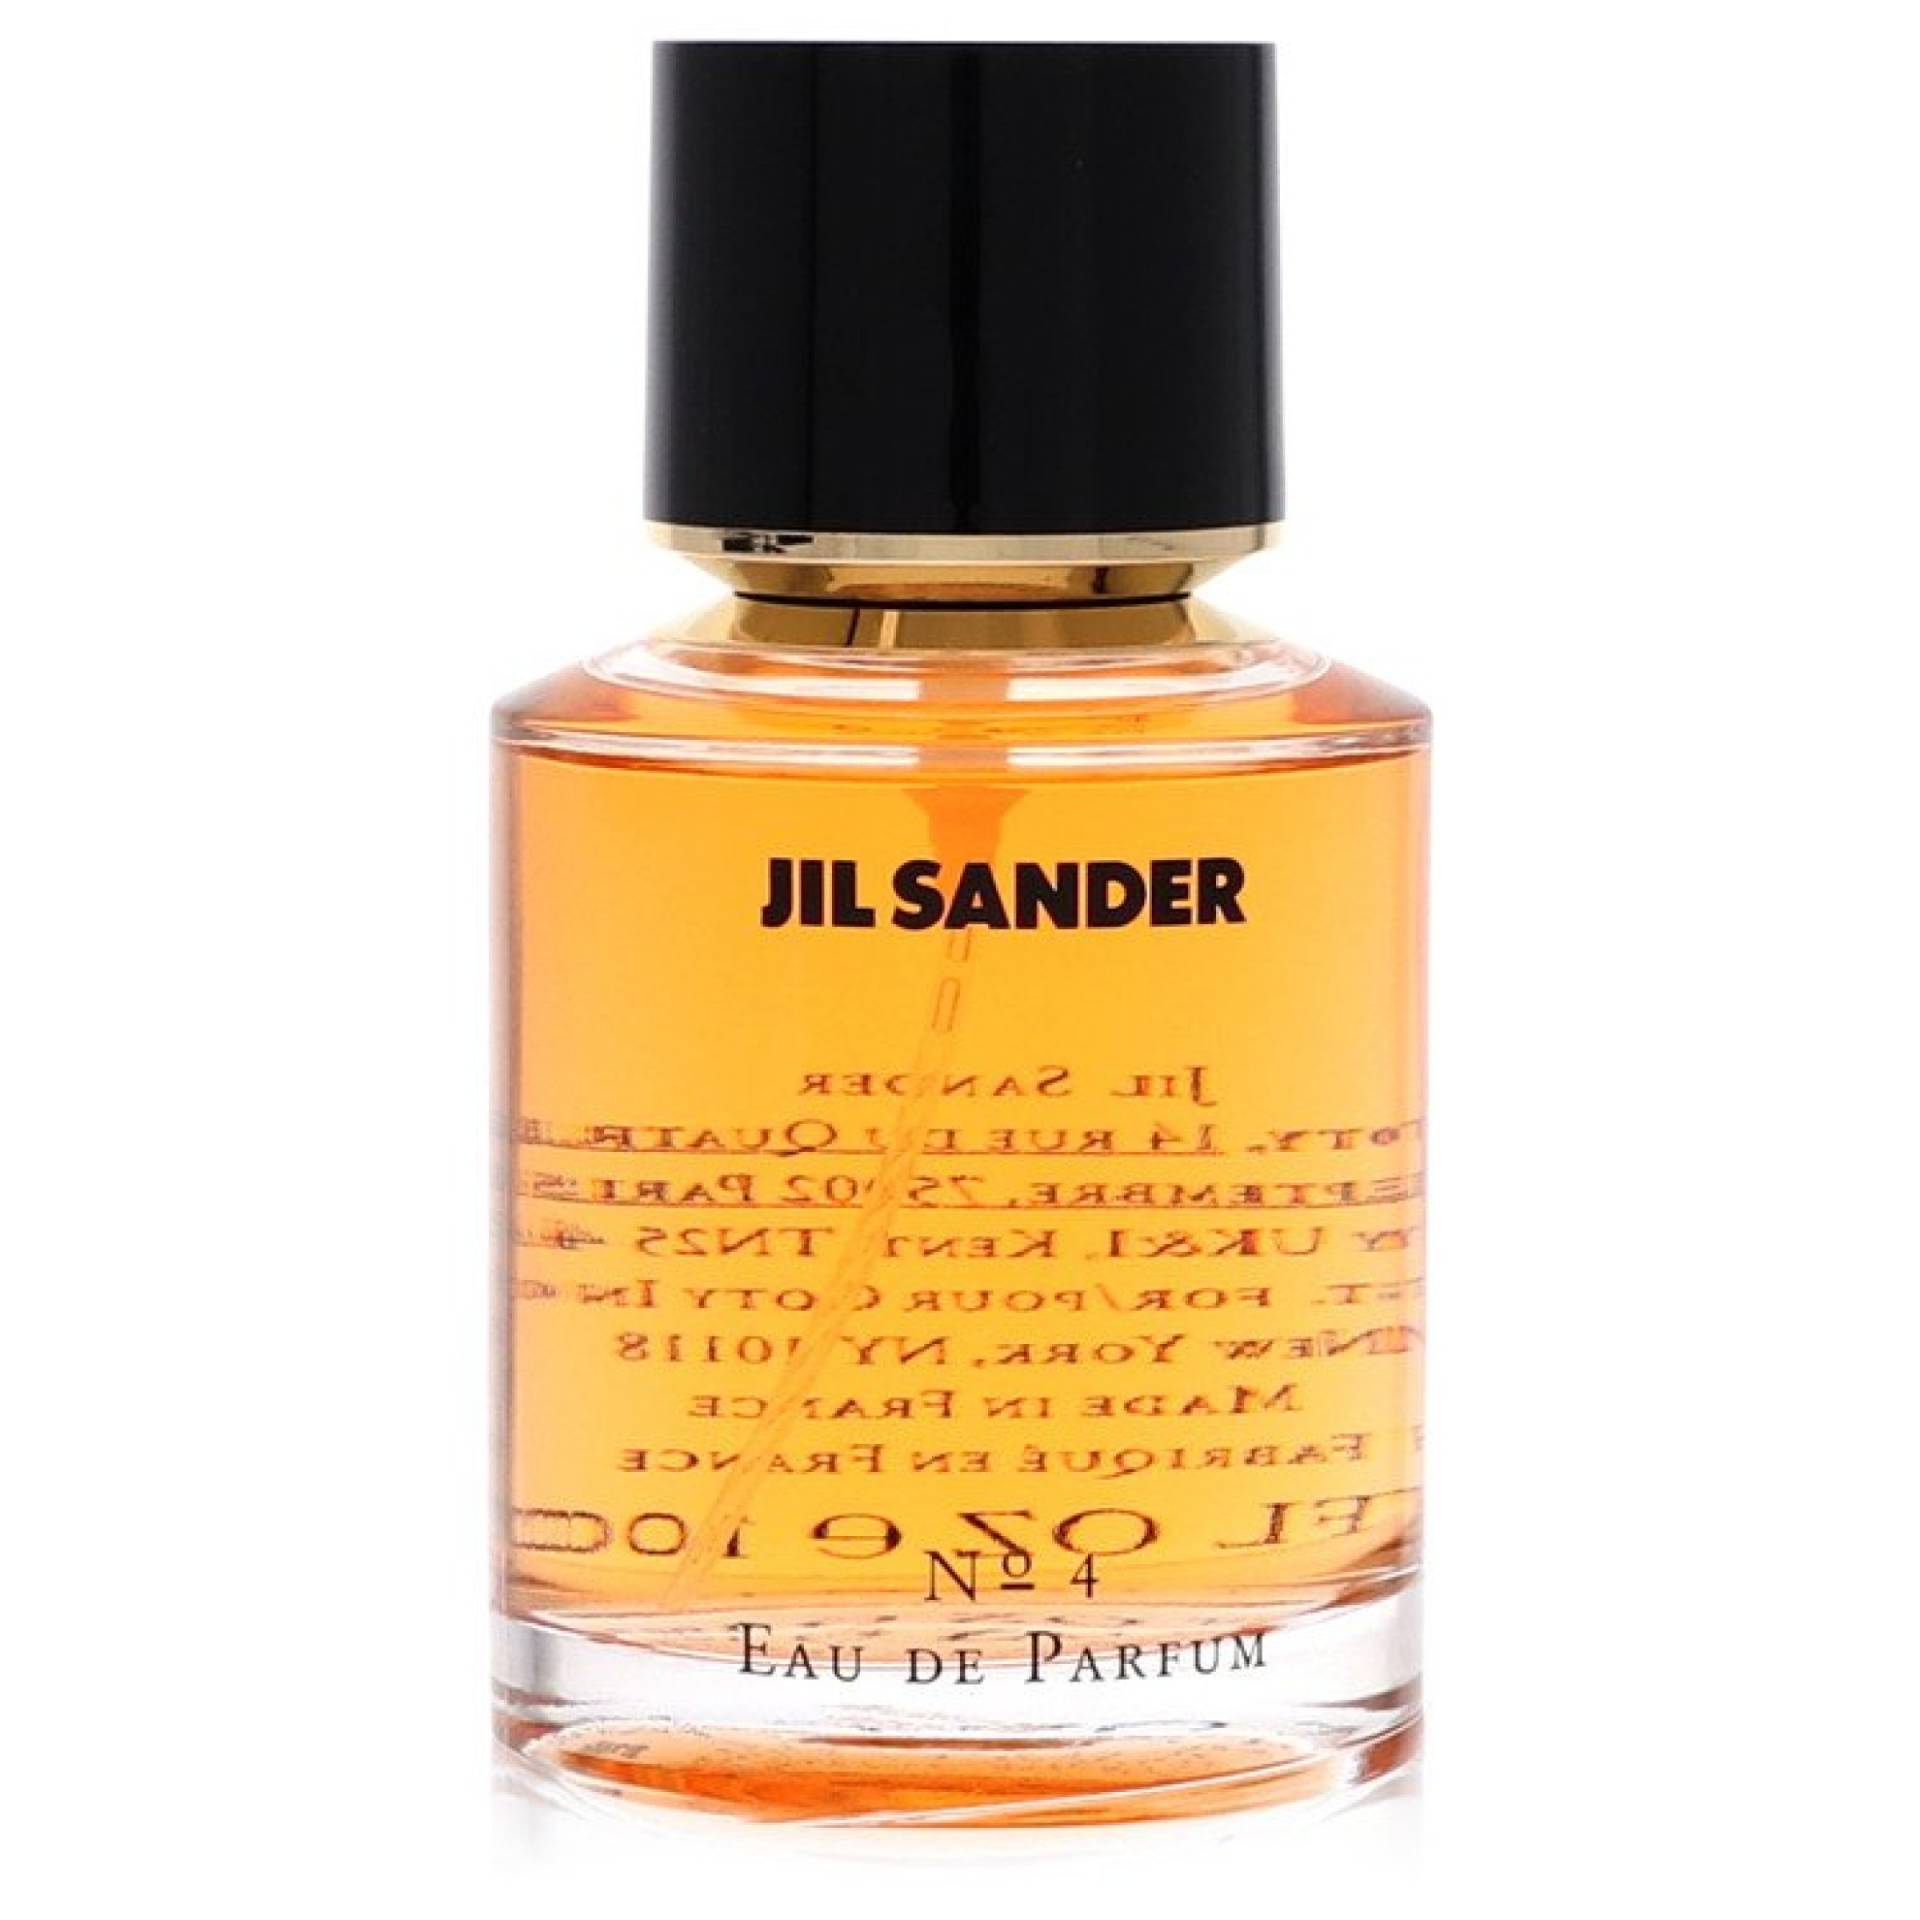 Jil Sander JIL SANDER #4 Eau De Parfum Spray (Tester) 100 ml von Jil Sander